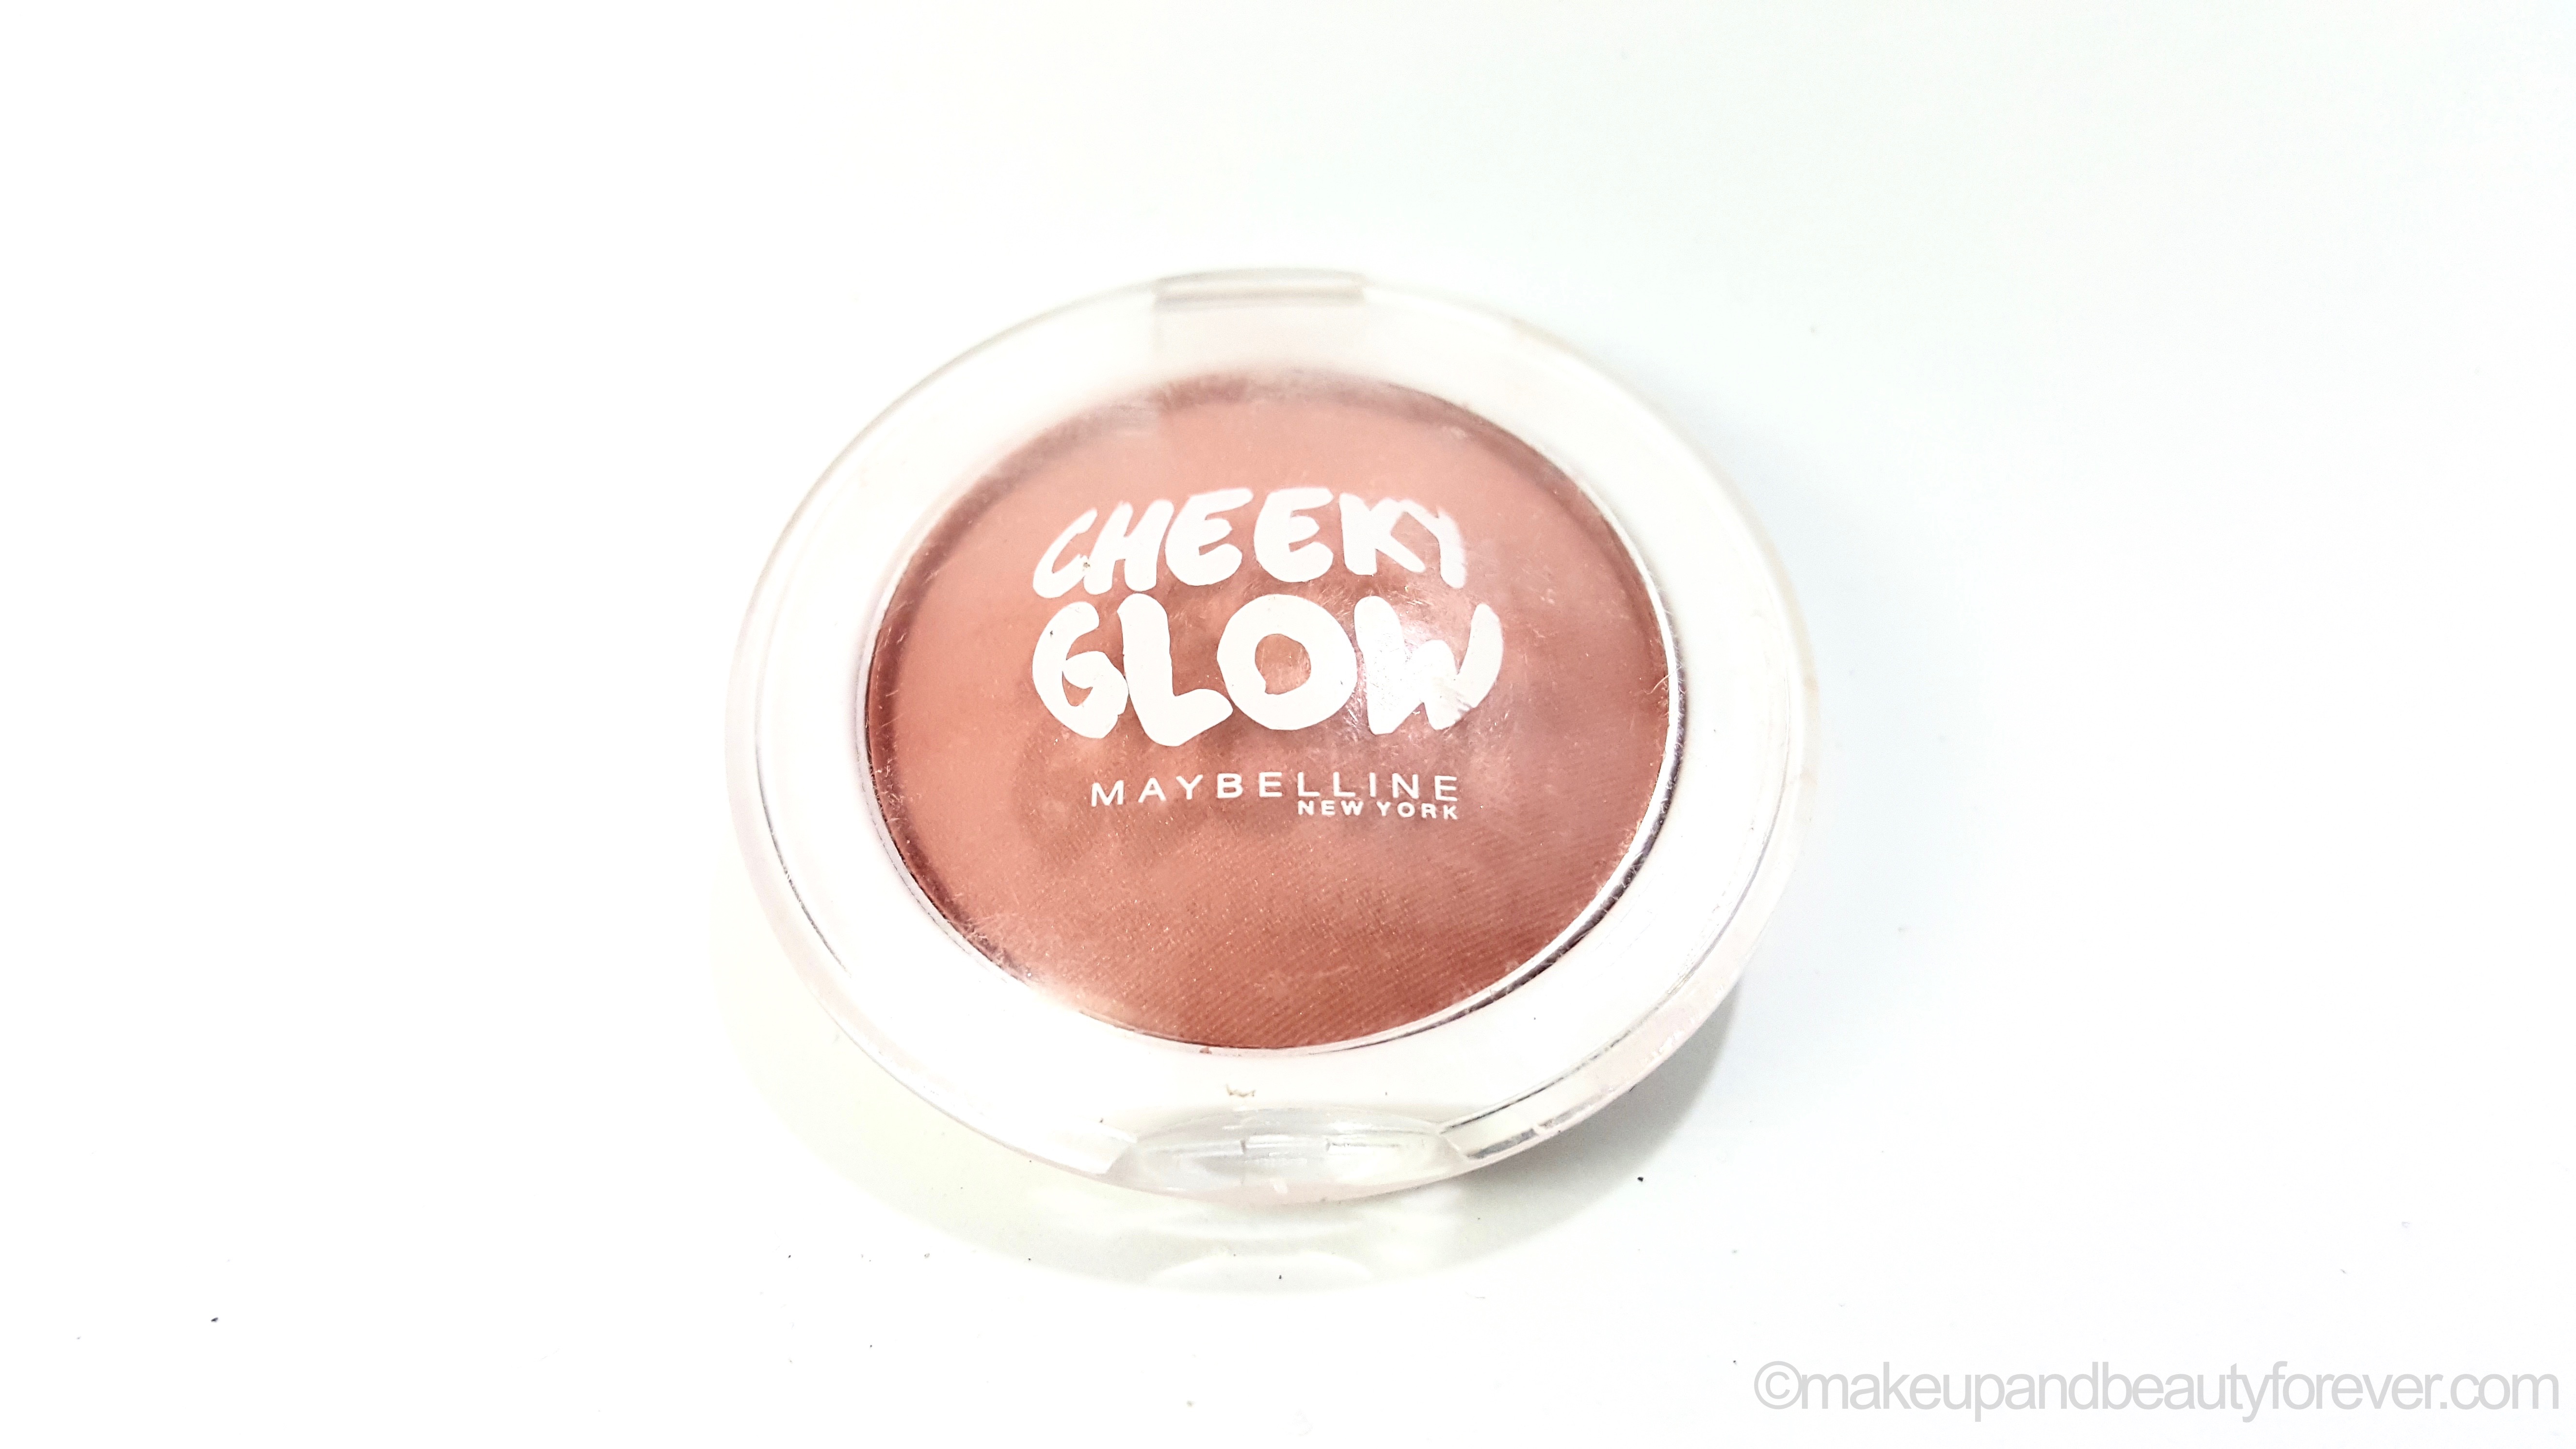 Maybelline Cheeky Glow Blush Creamy Cinnamon Review